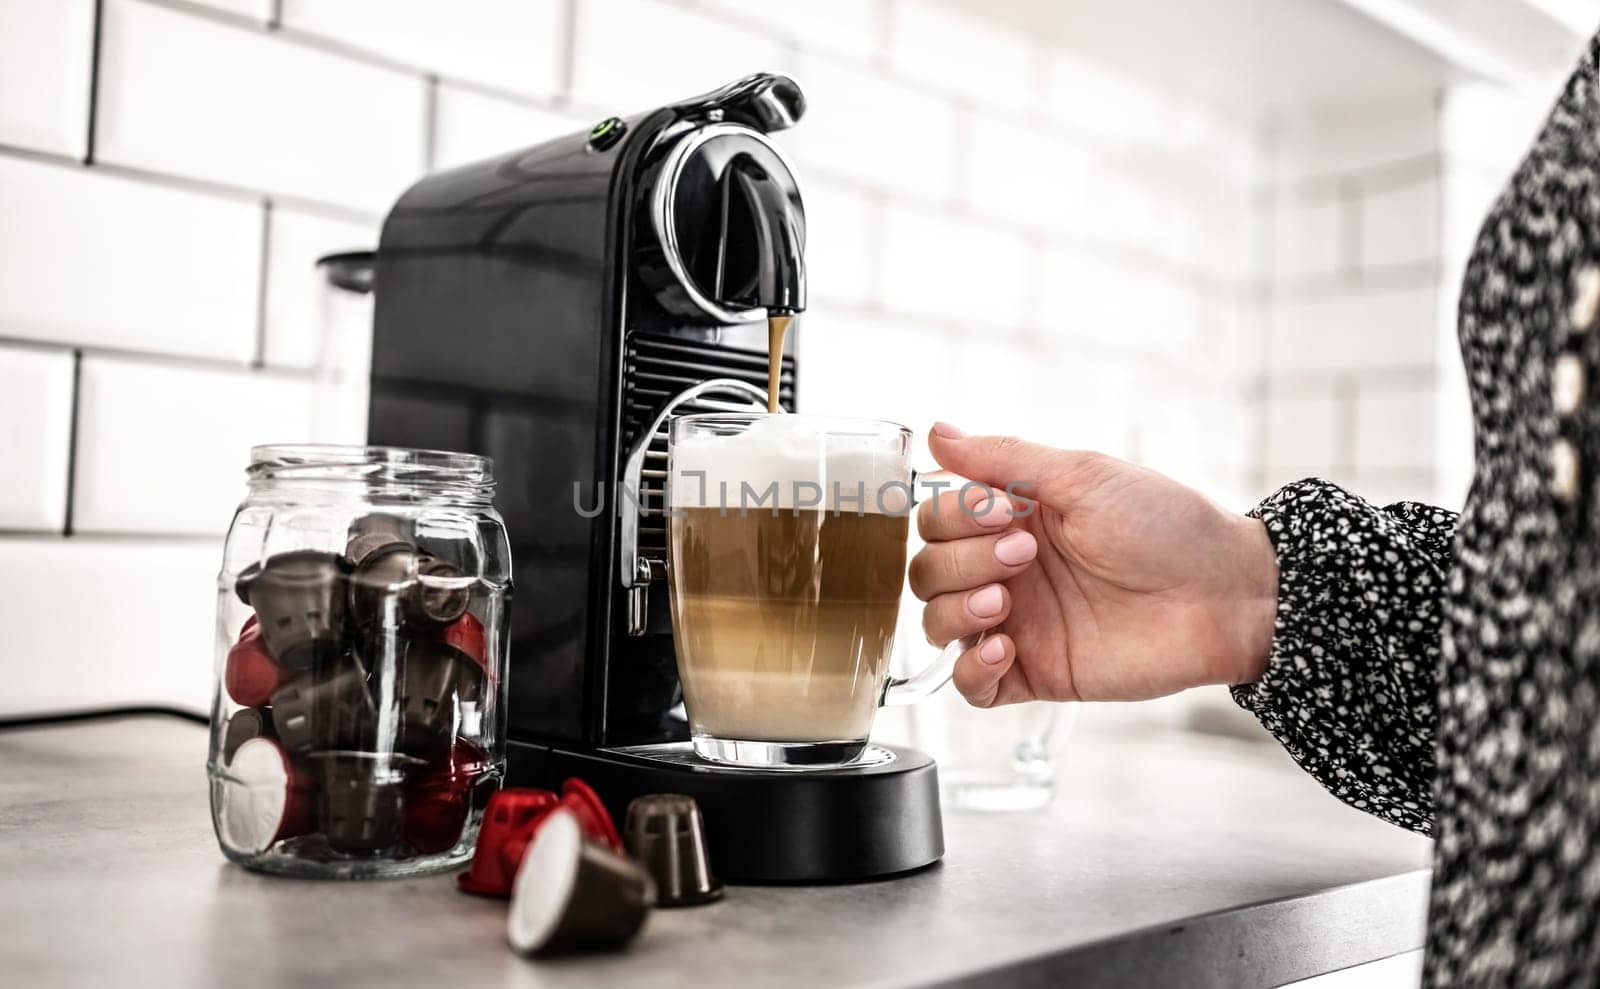 Capsule coffee machine at domestic kitchen by GekaSkr